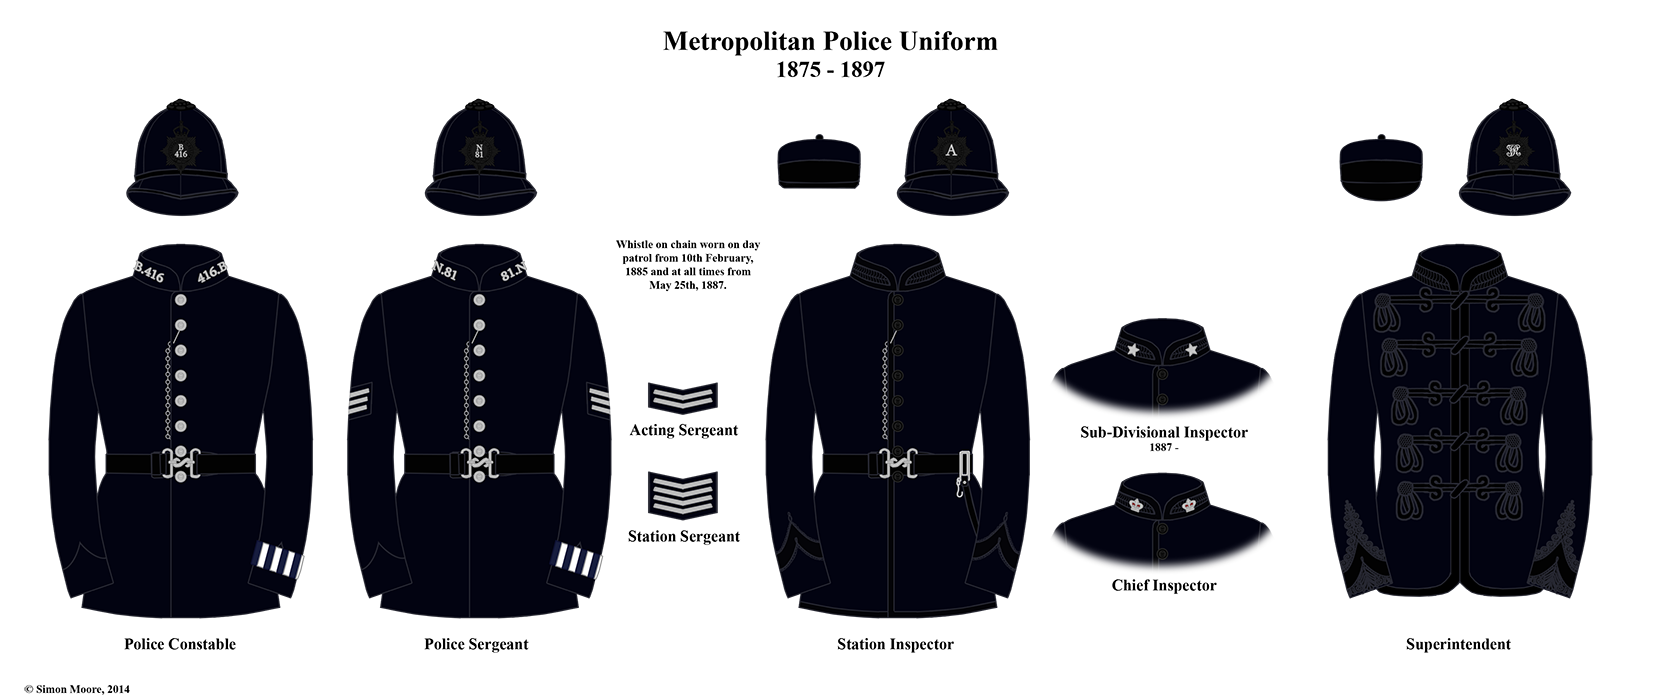 met_police_uniforms_by_simonlmoore-d7xjw